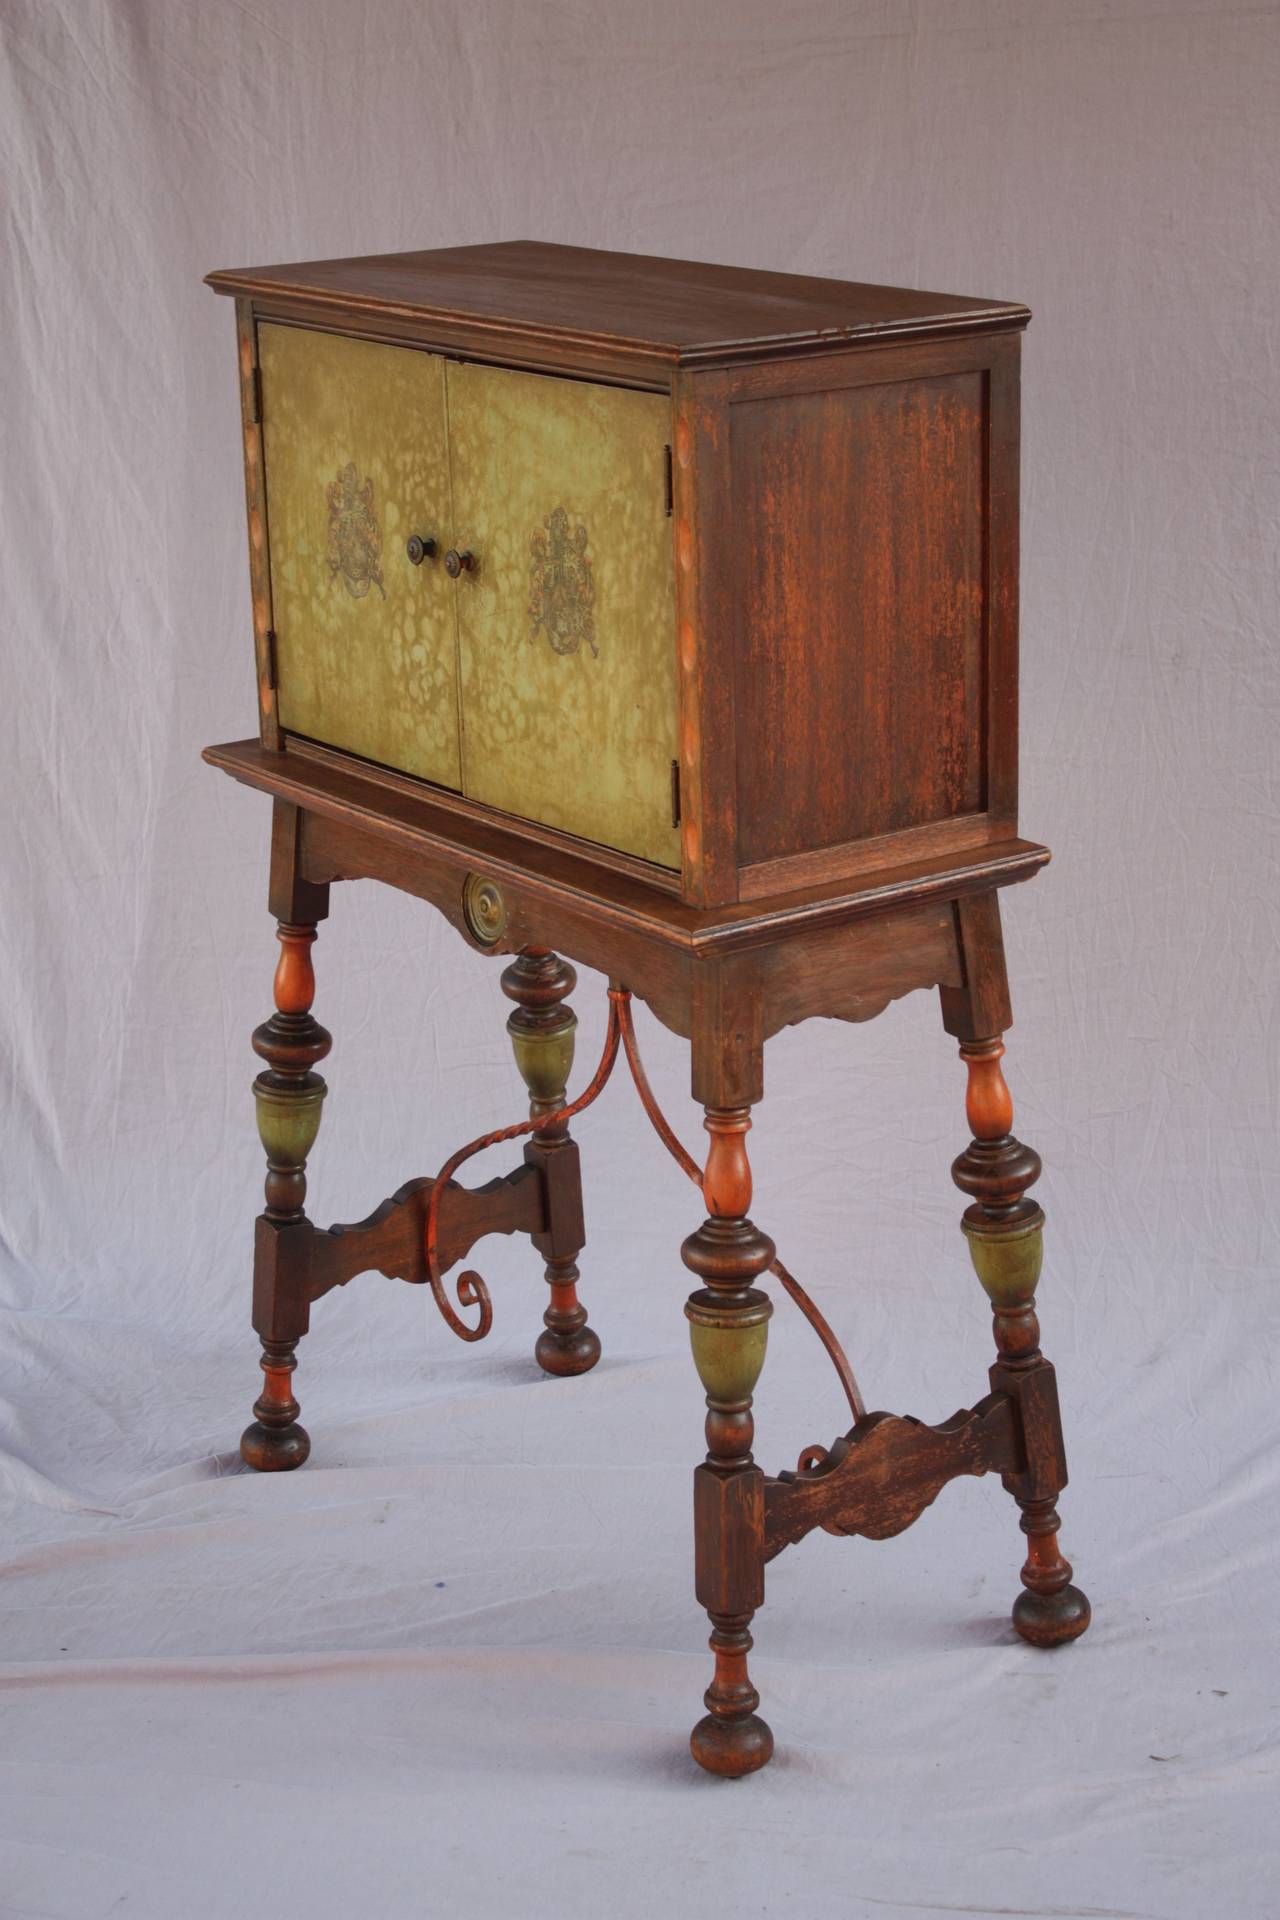 Circa 1920's small vargueno type desk cabinet. Original finish and iron work. Measures: 32.5